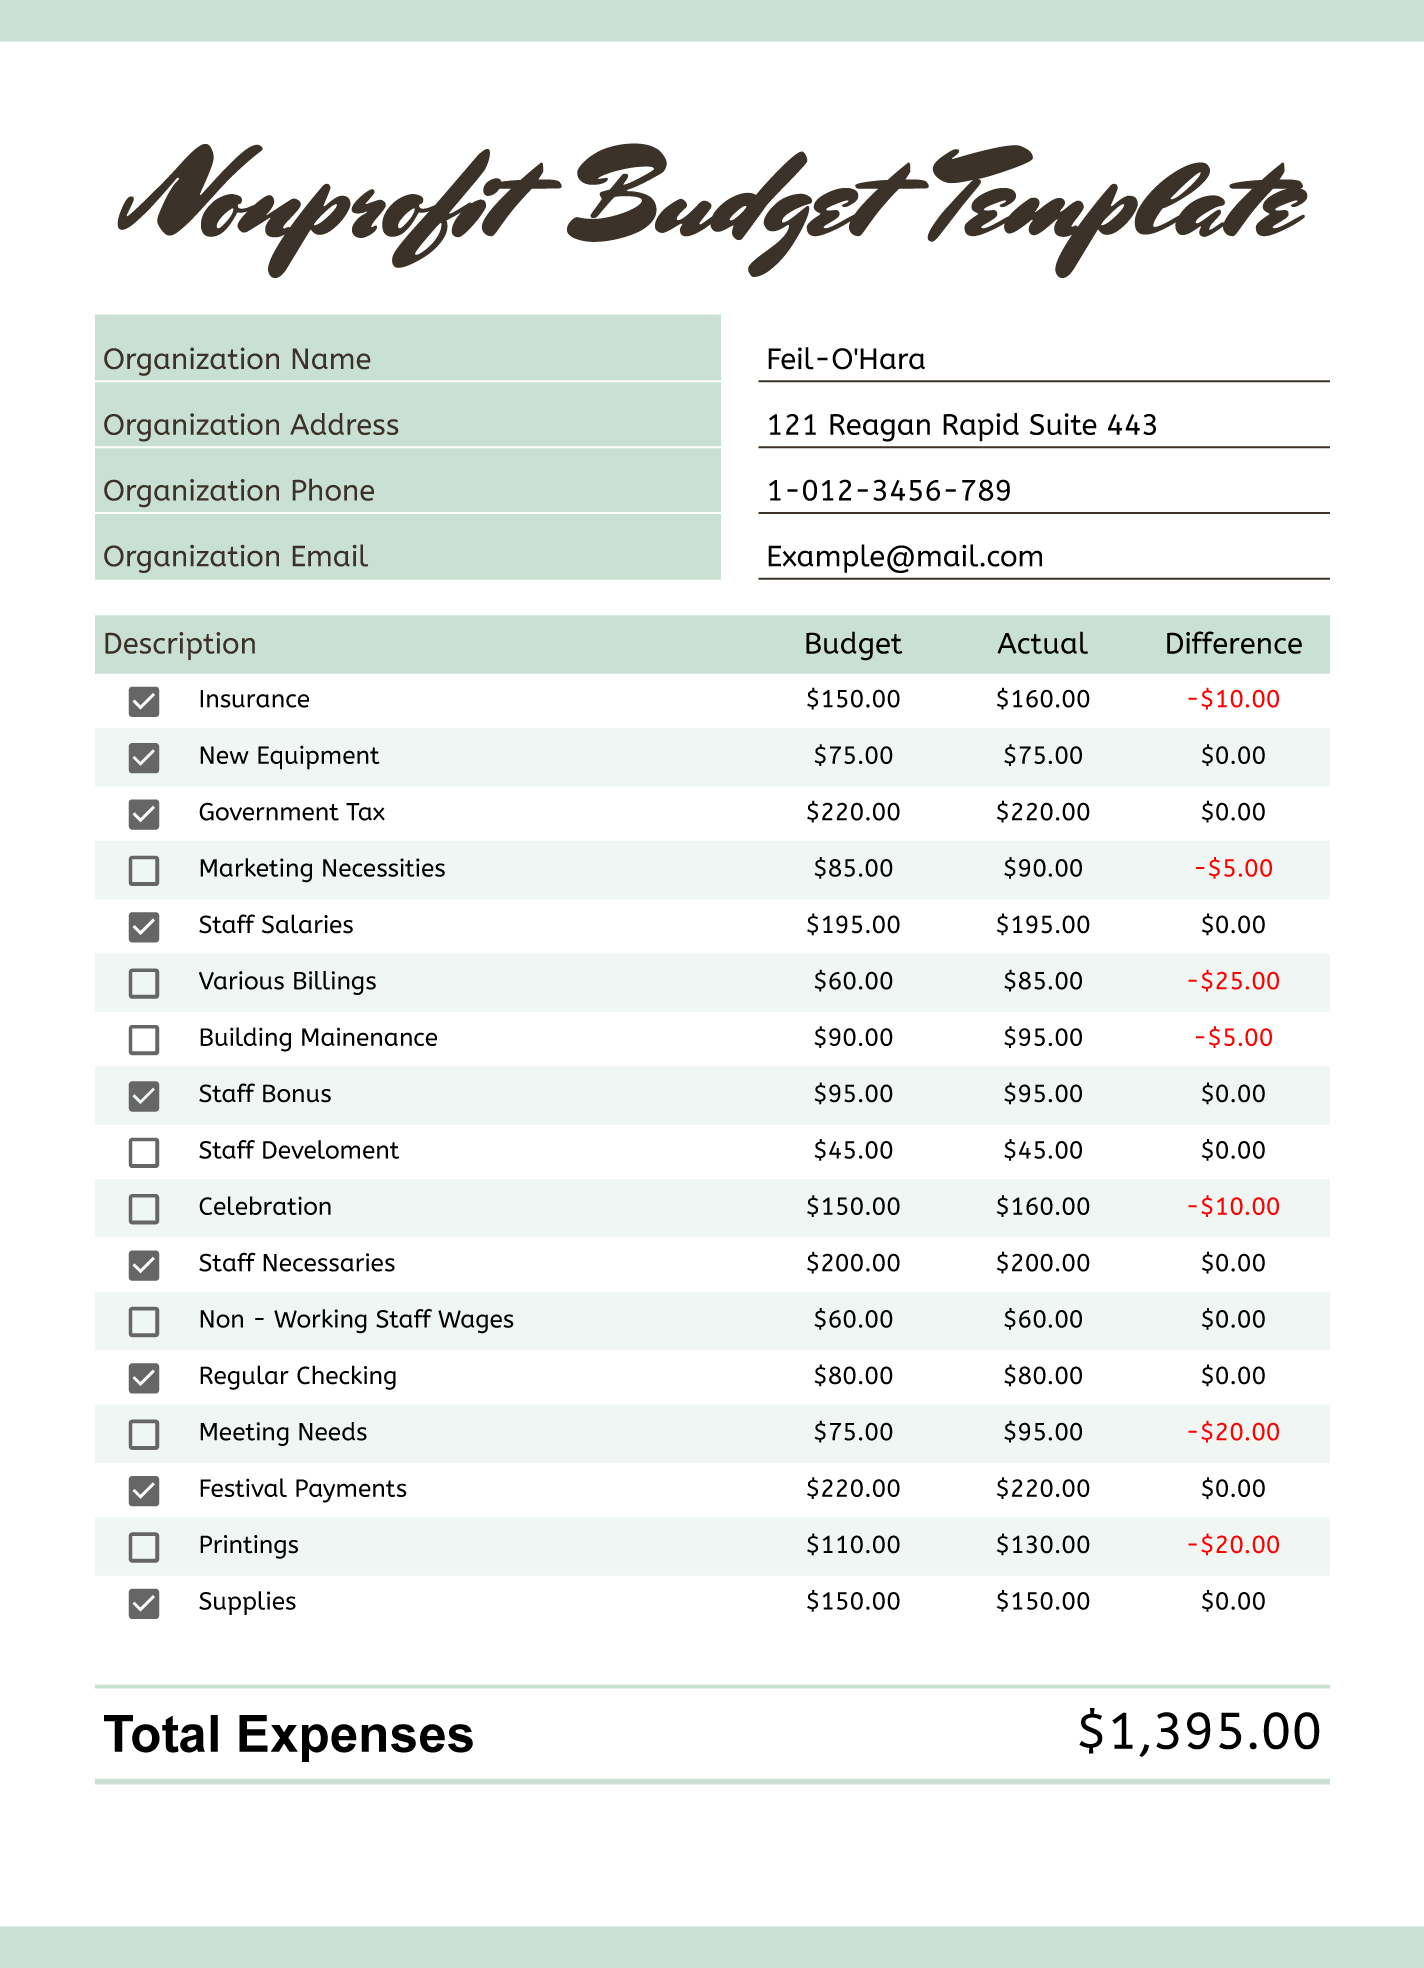 Nonprofit Budget Free Google Sheets & Excel Template gdoc.io